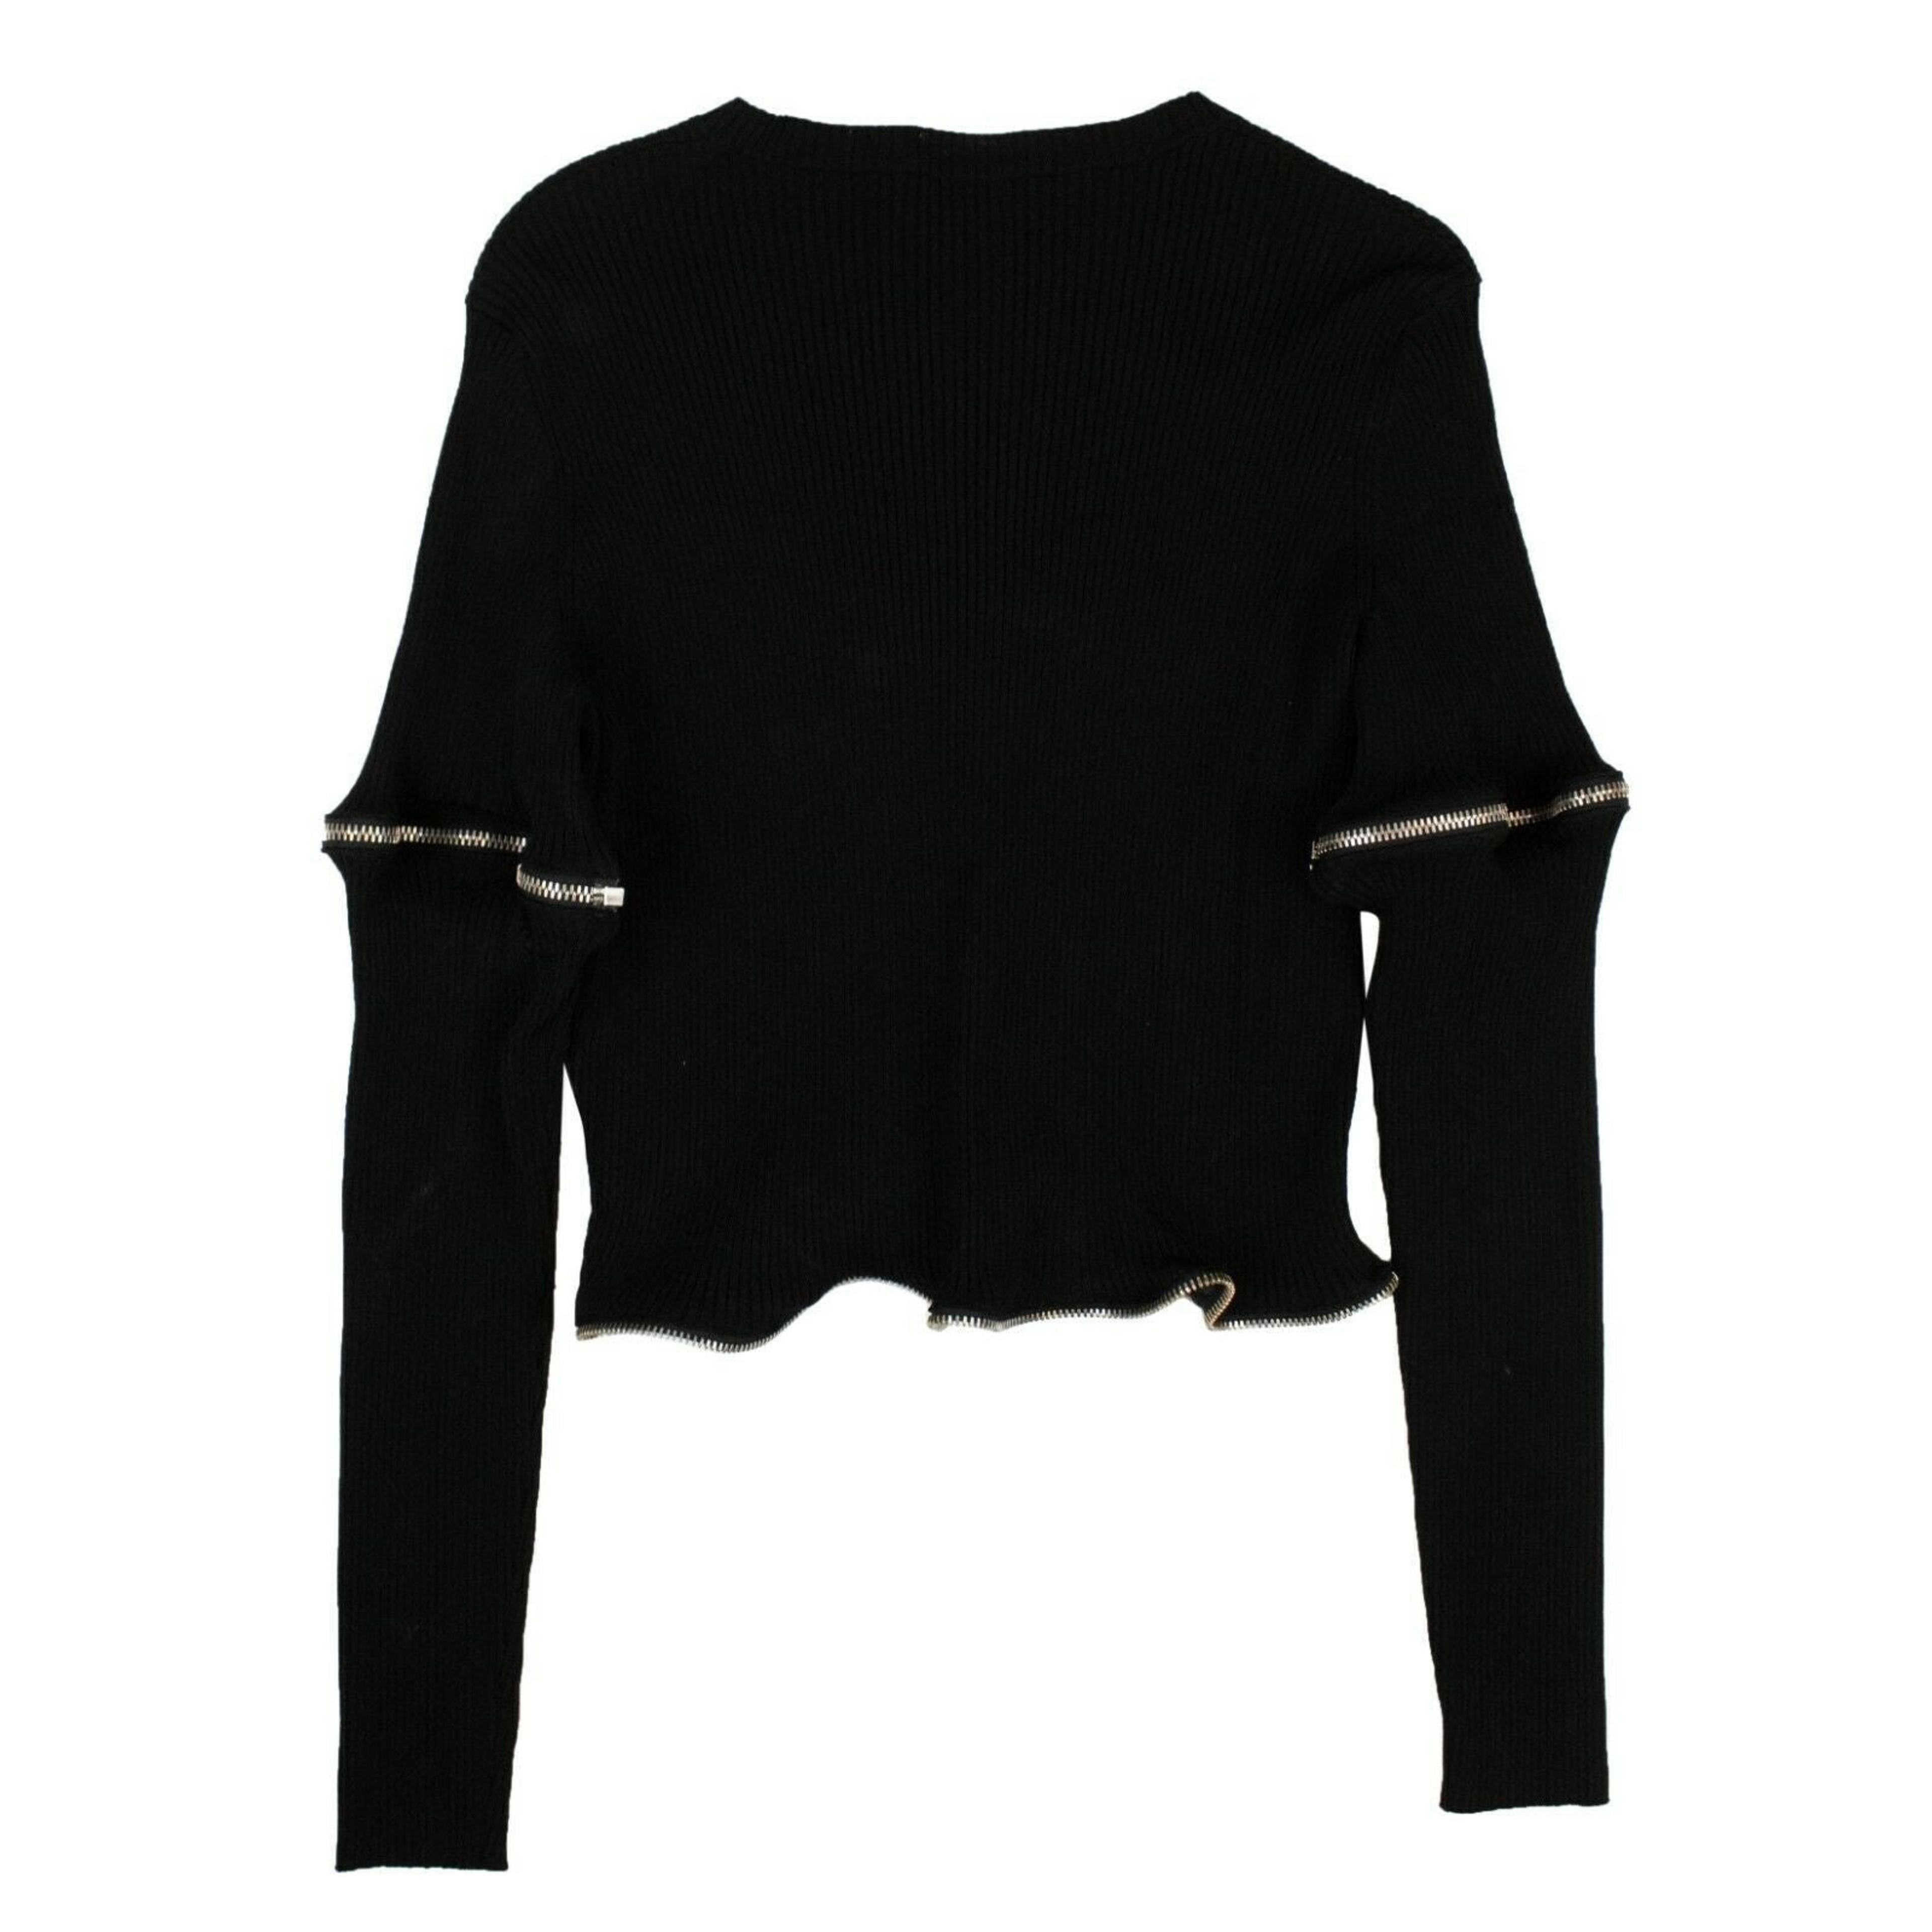 Alternate View 1 of Women's Black Zipped Rouches Sweater